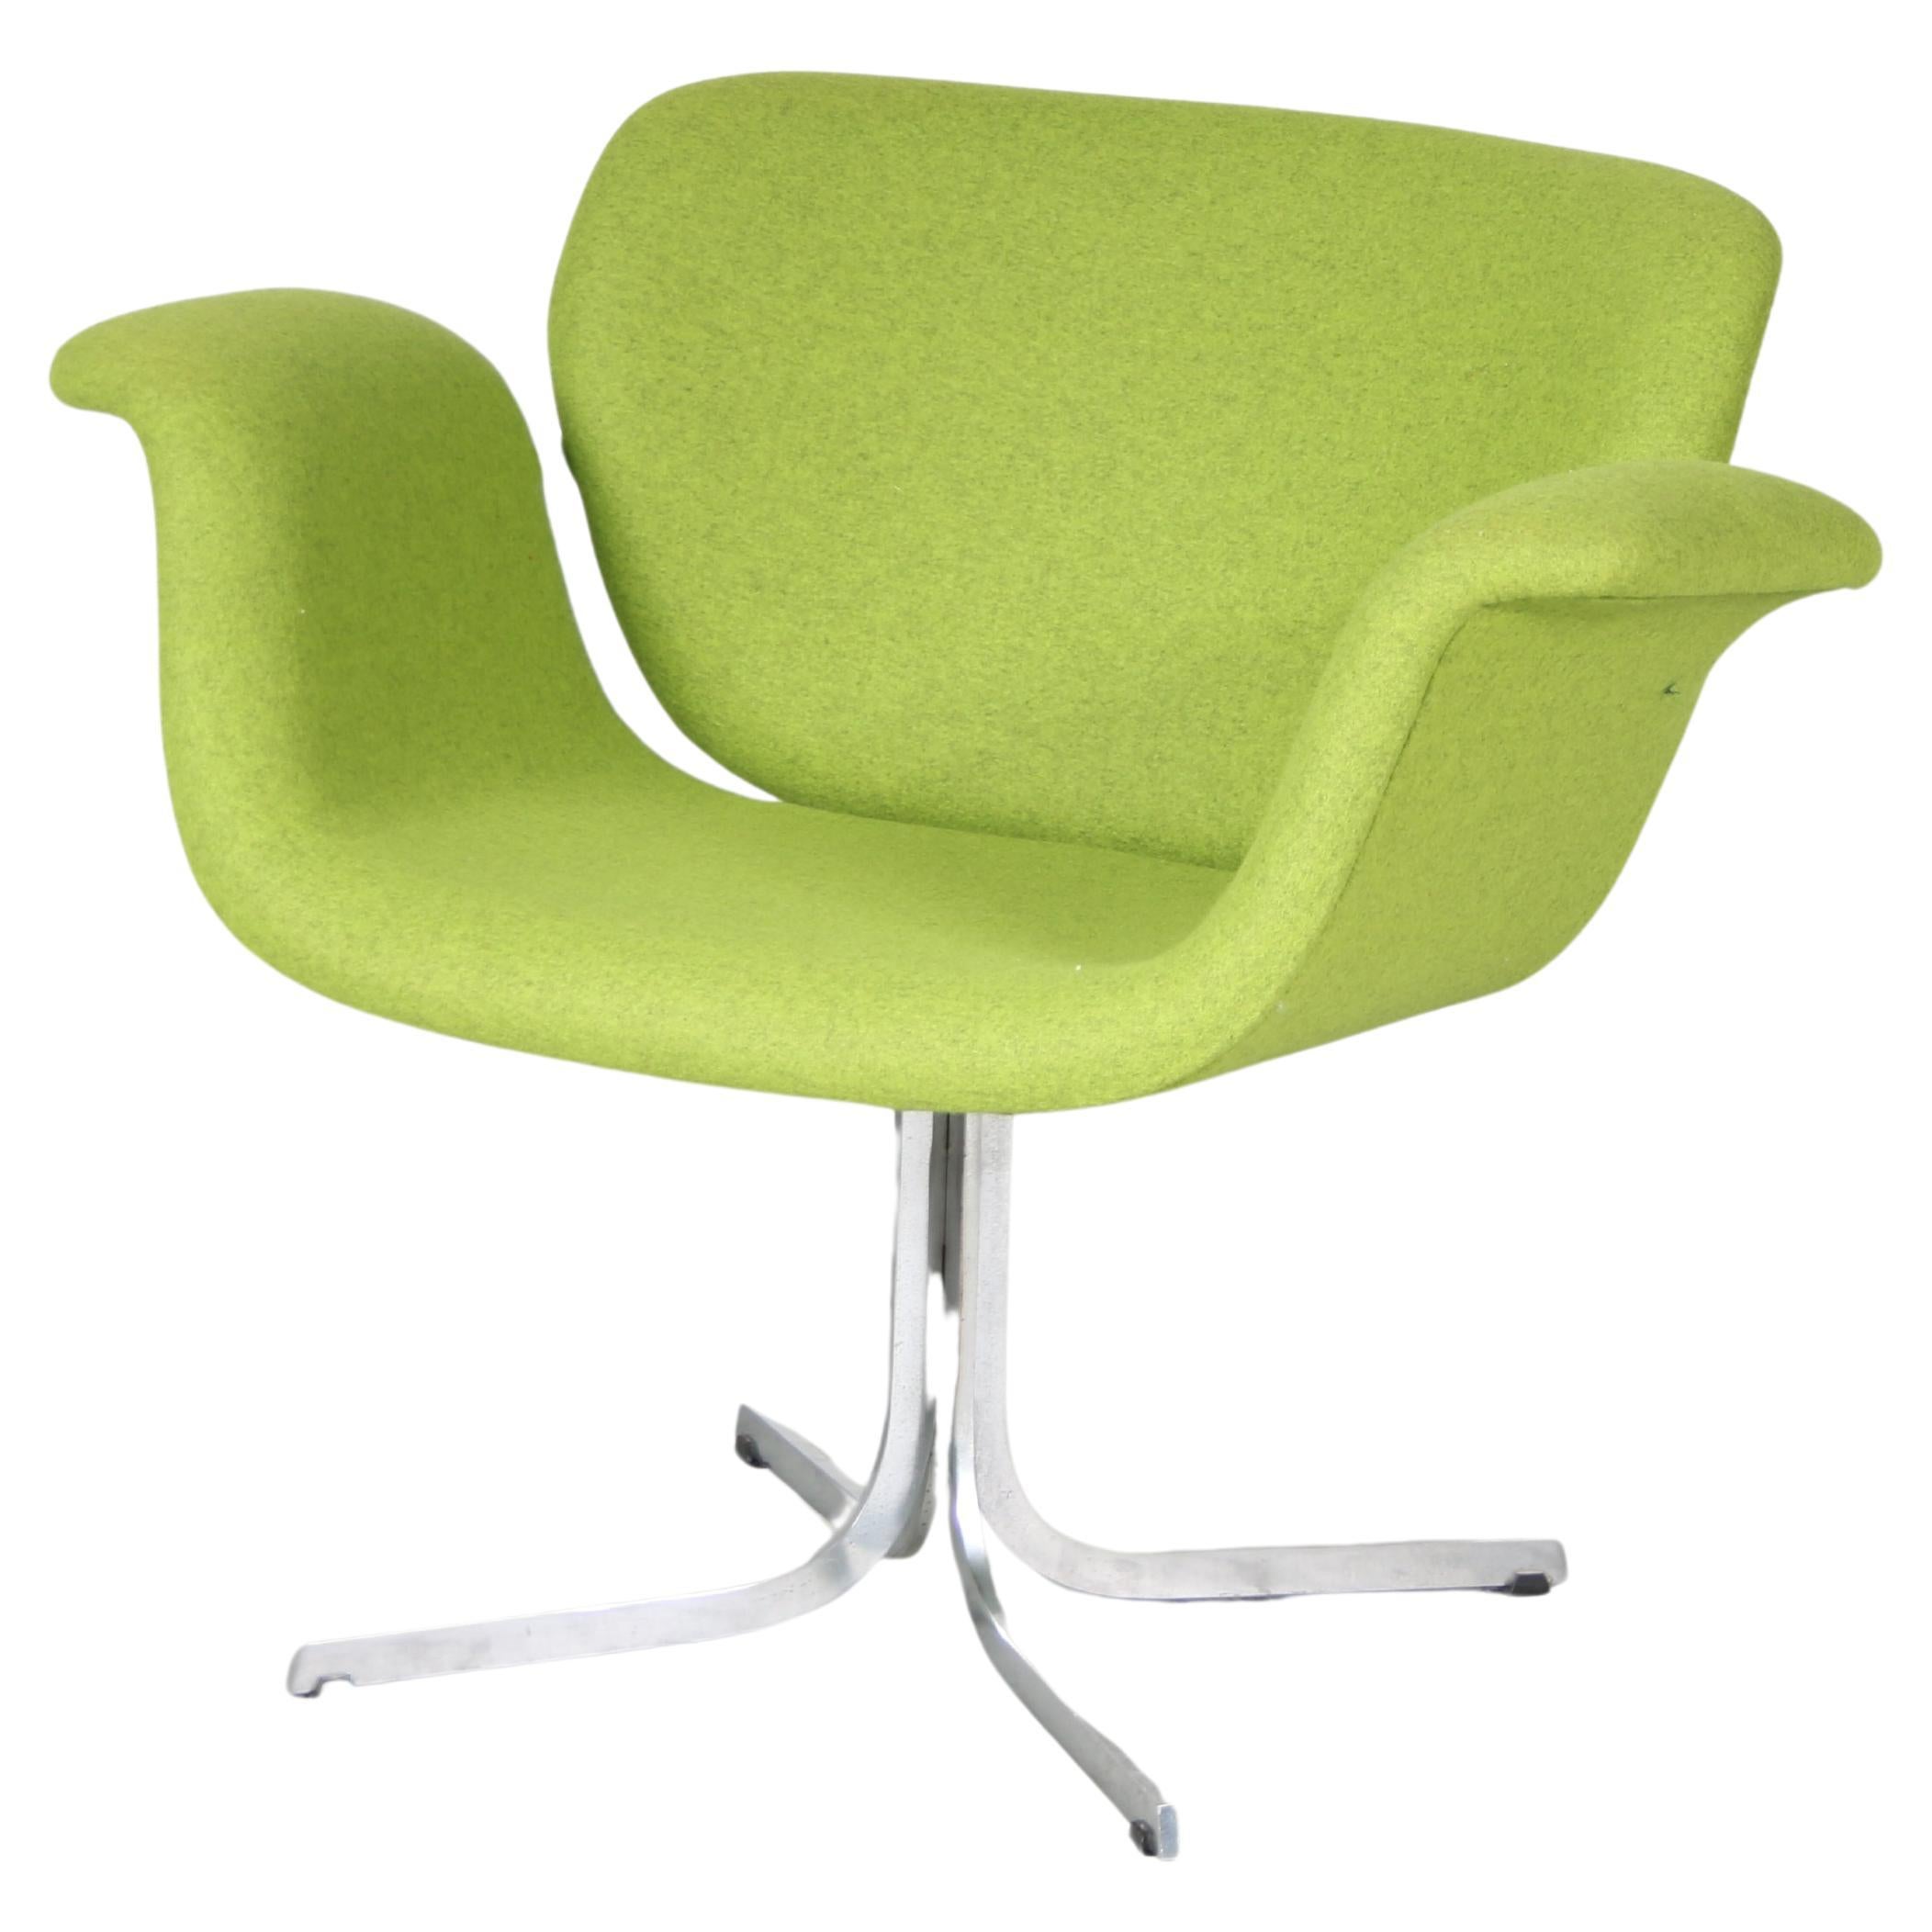 Pierre Paulin “Big Tulip” Chair for Artifort, Netherlands 1960 For Sale